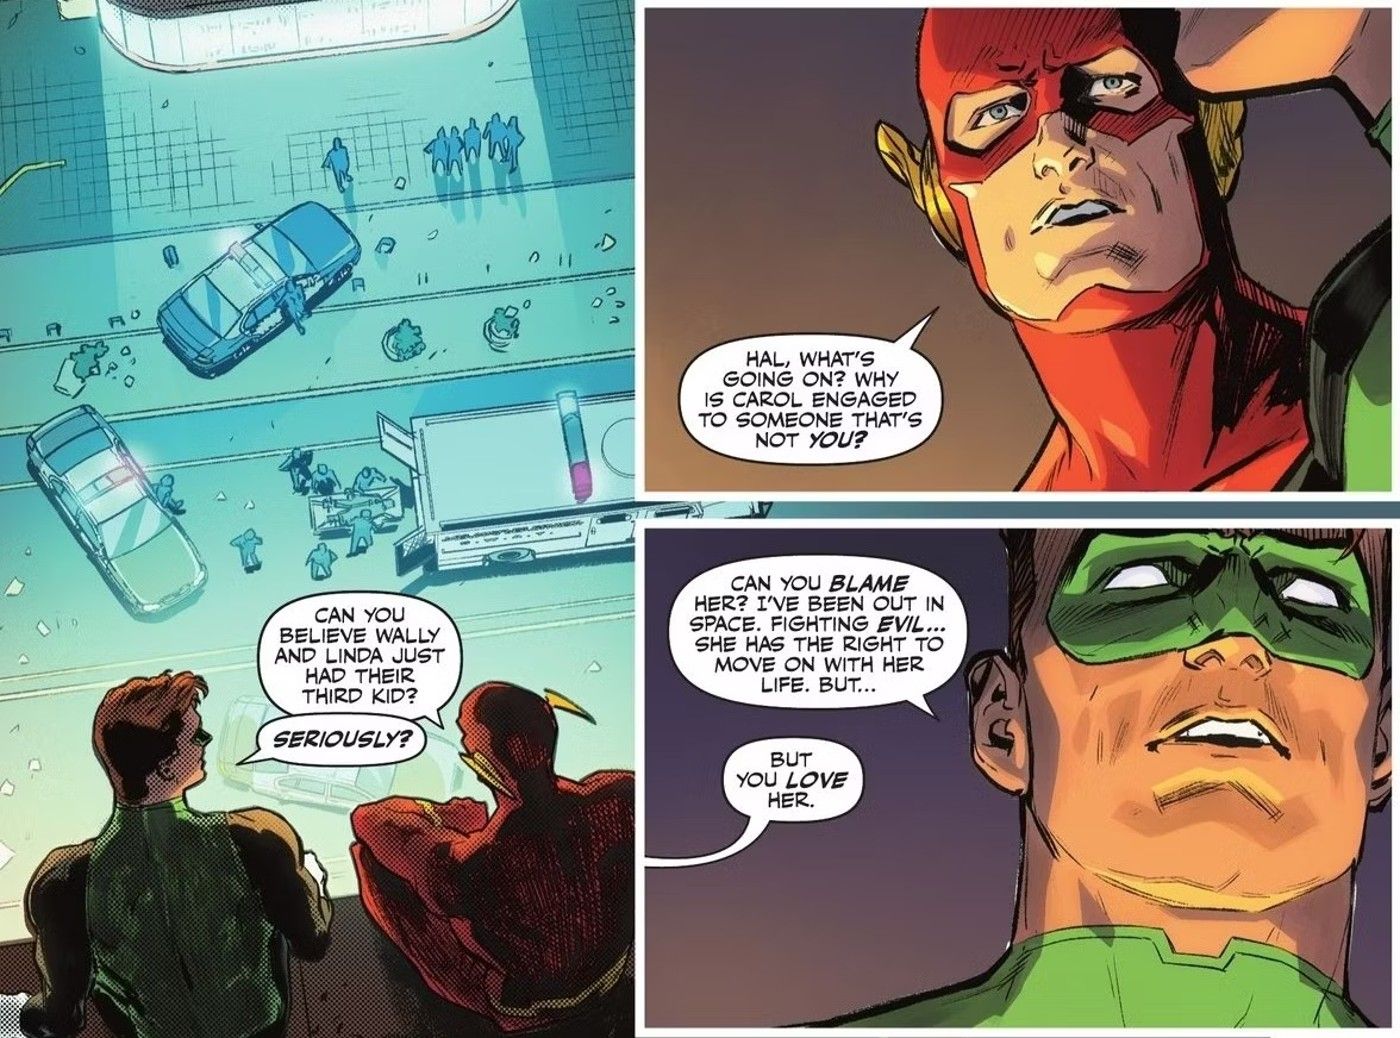 The Flash Asks Green Lantern about Carol